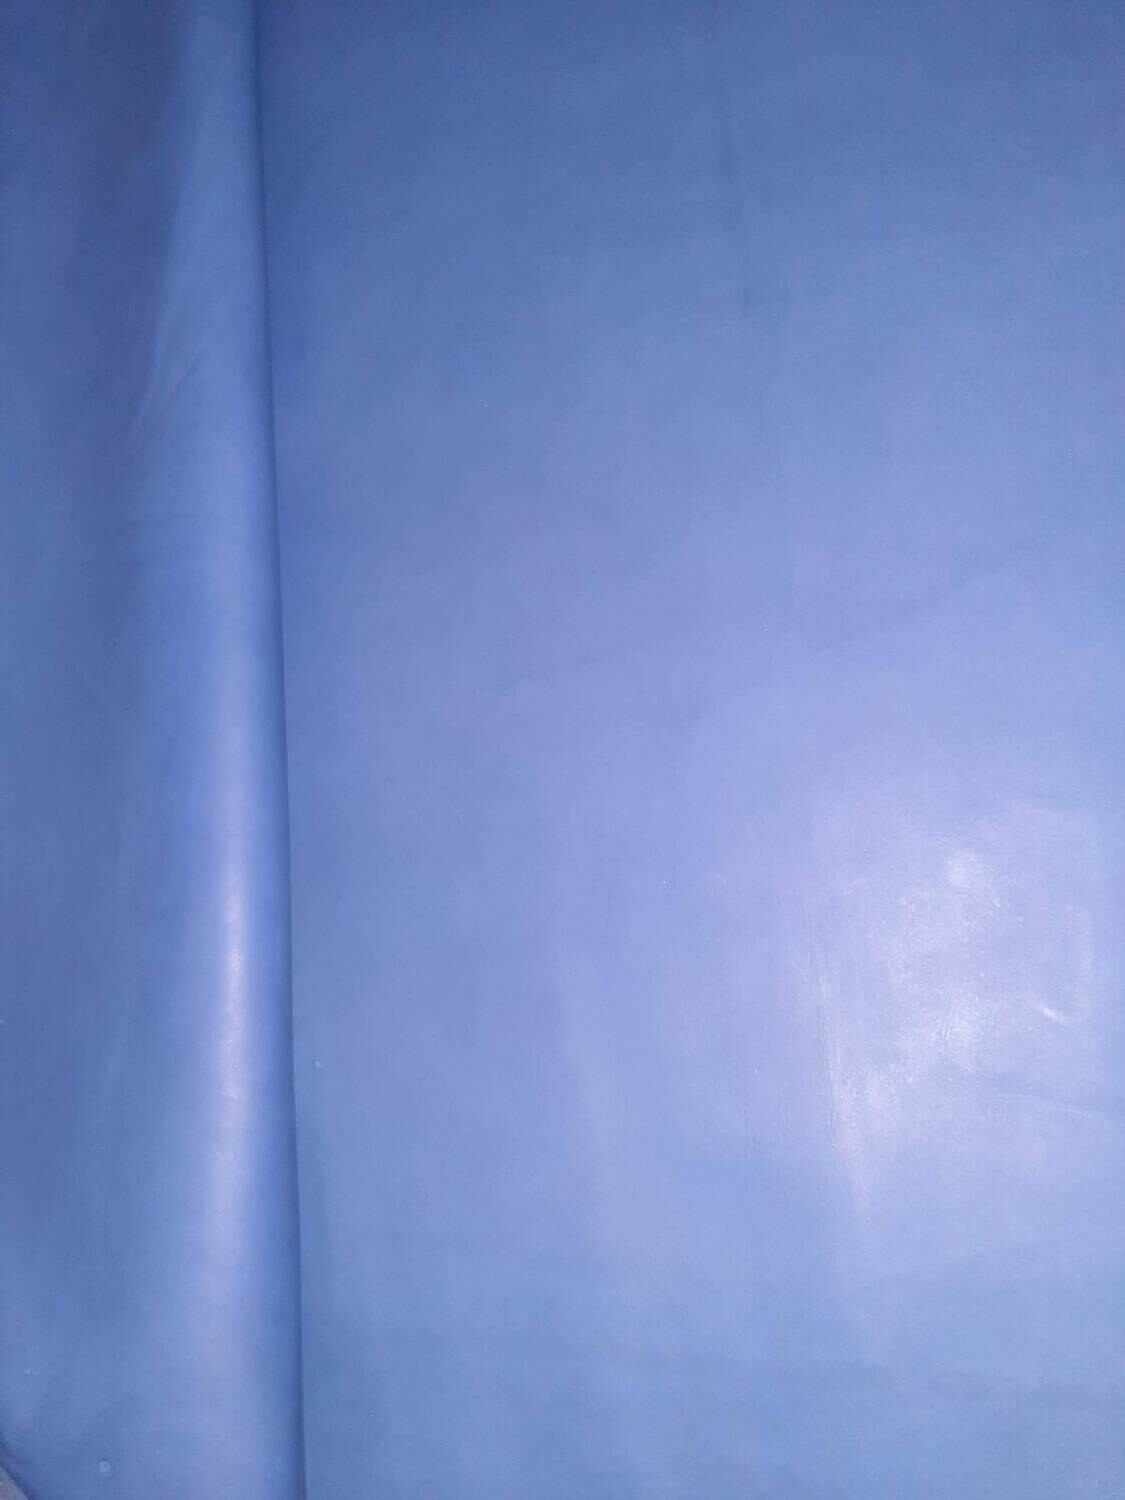 Leather bovine aniline blue color